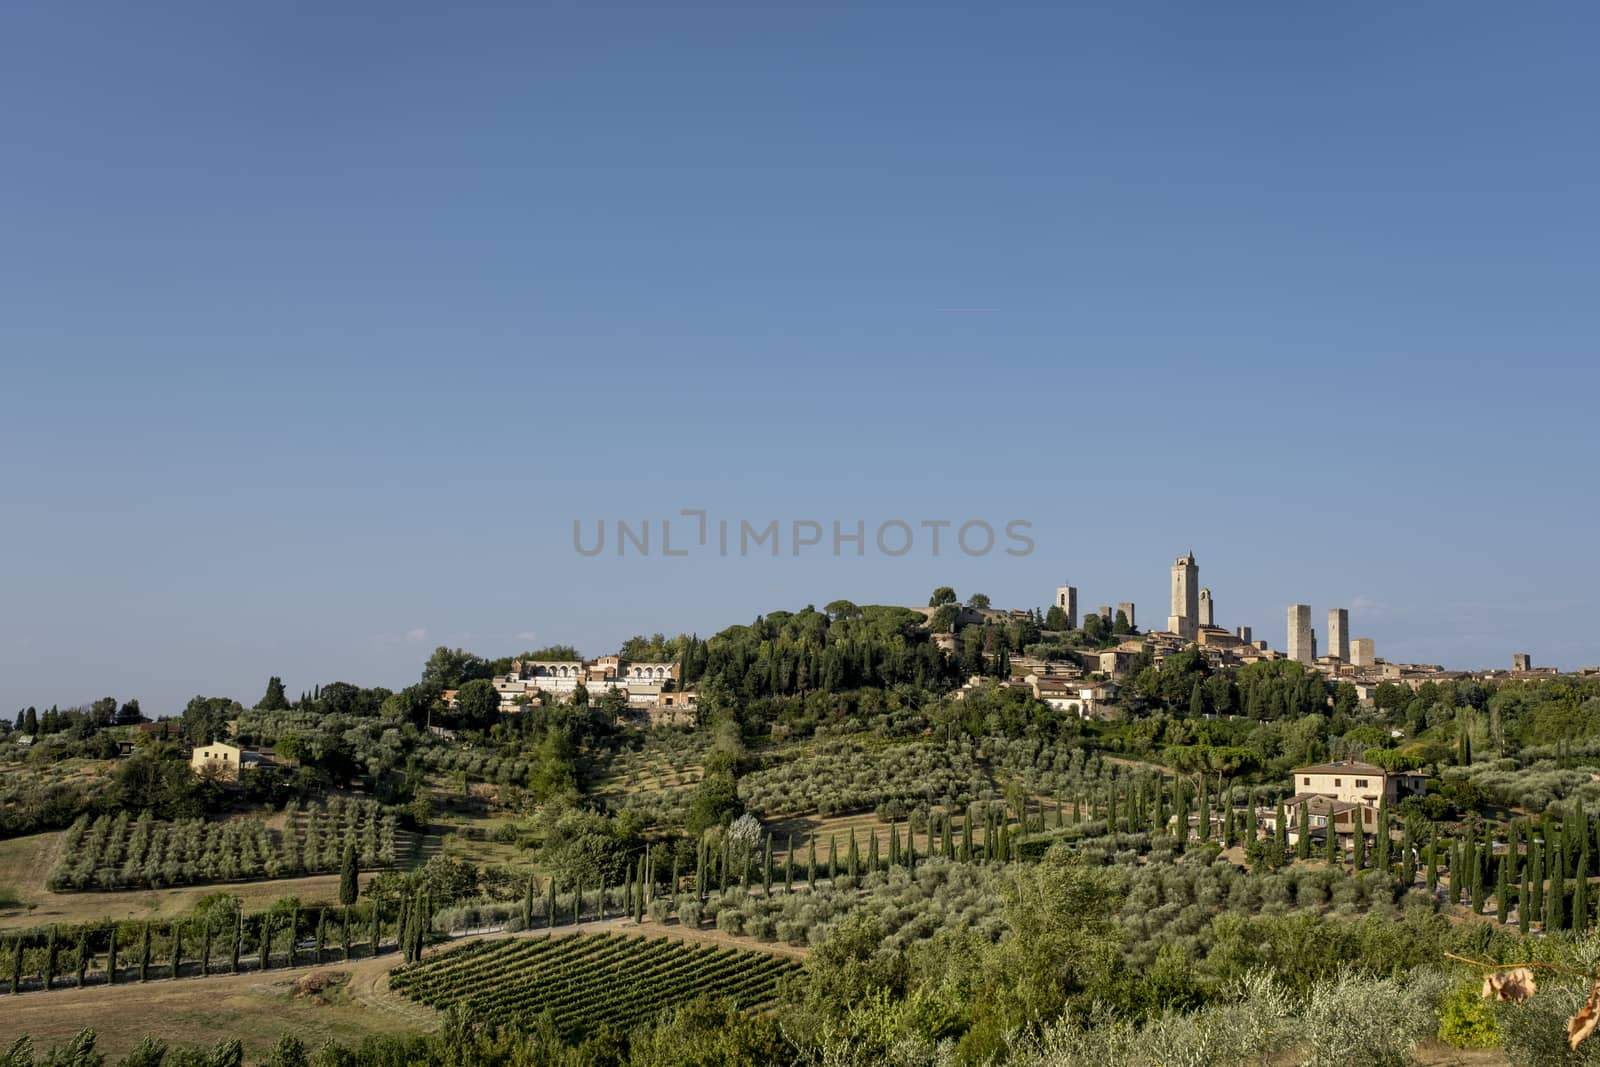 The medieval skyline of San Gimignano in Siena, Italy.